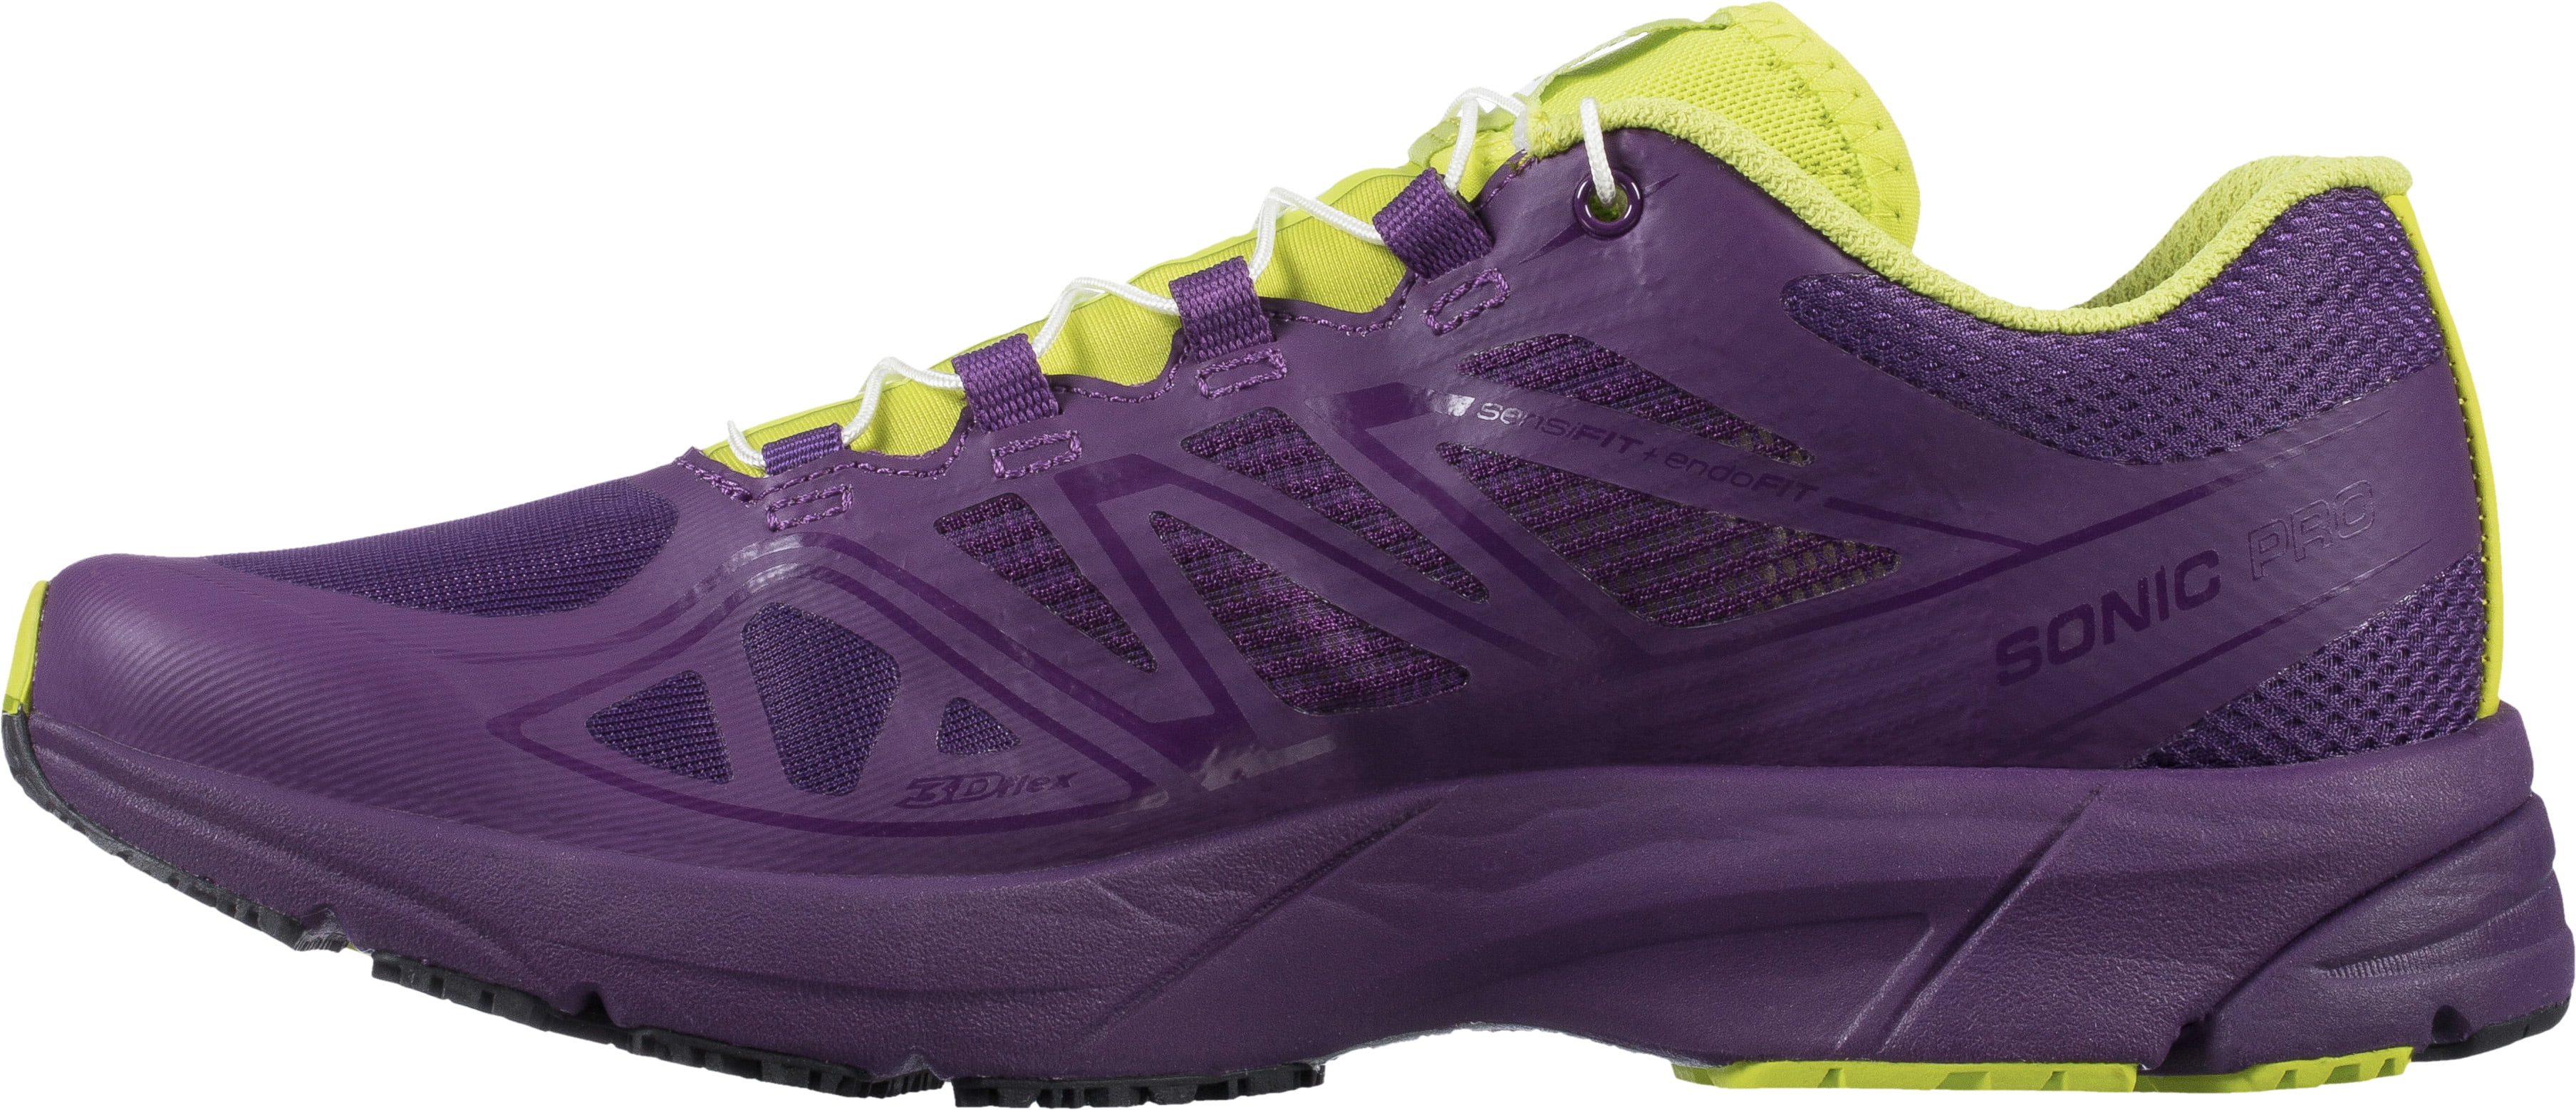 Running Shoes Salomon Sonic-Pro W,Profeel,Energy Cell,contagrip,379173,Purple 